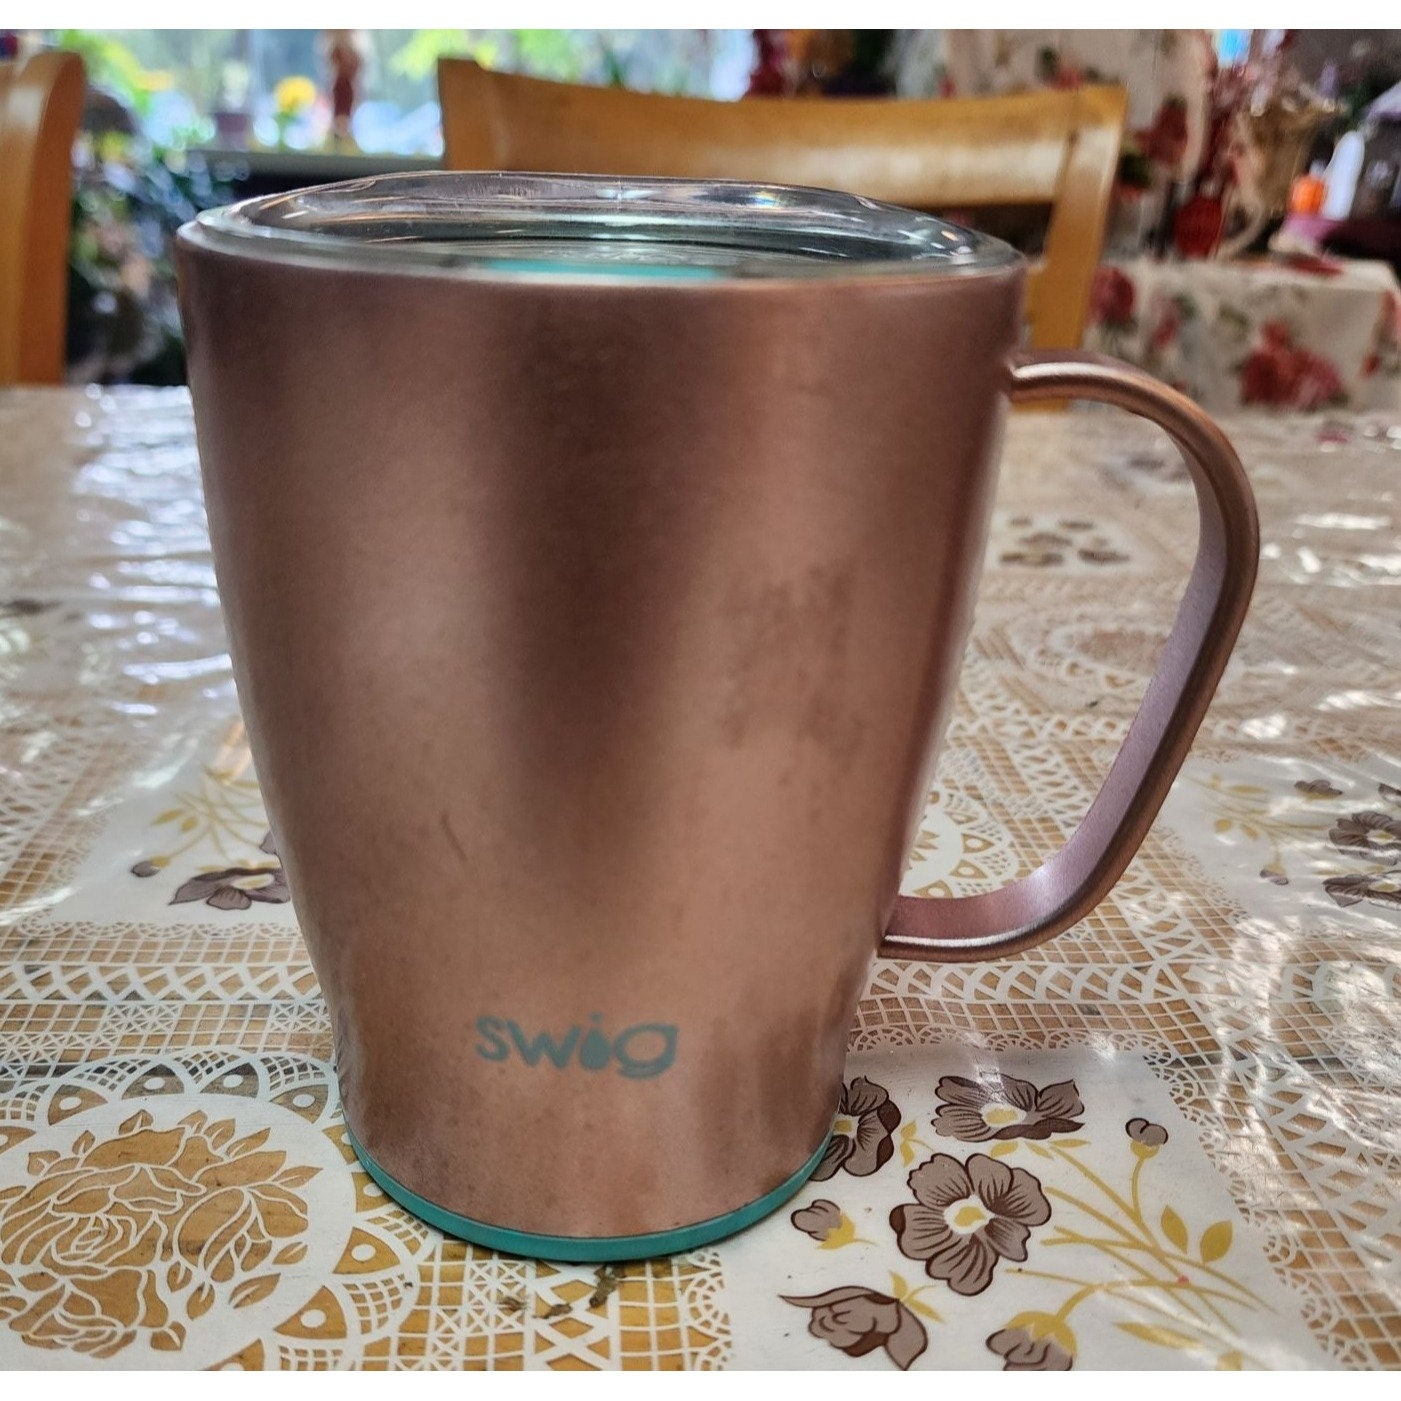 SWIG LIFE insulated 18 oz COFFEE MUG WHITE, stainless steel, NWT